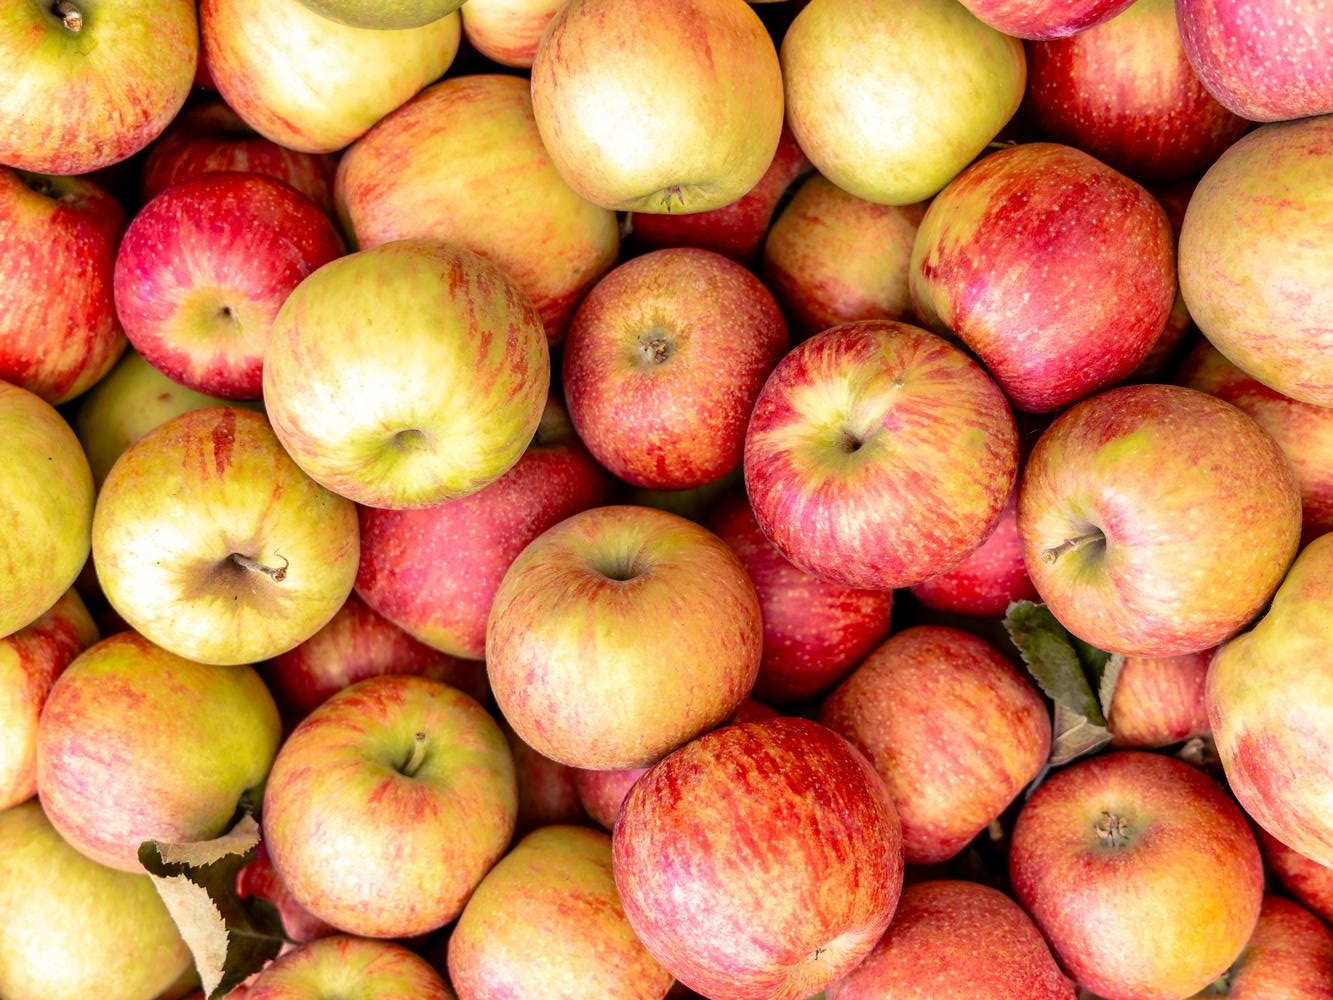 Red Delicious Apples Washington State Fresh Produce Fruit 3 lb Bag